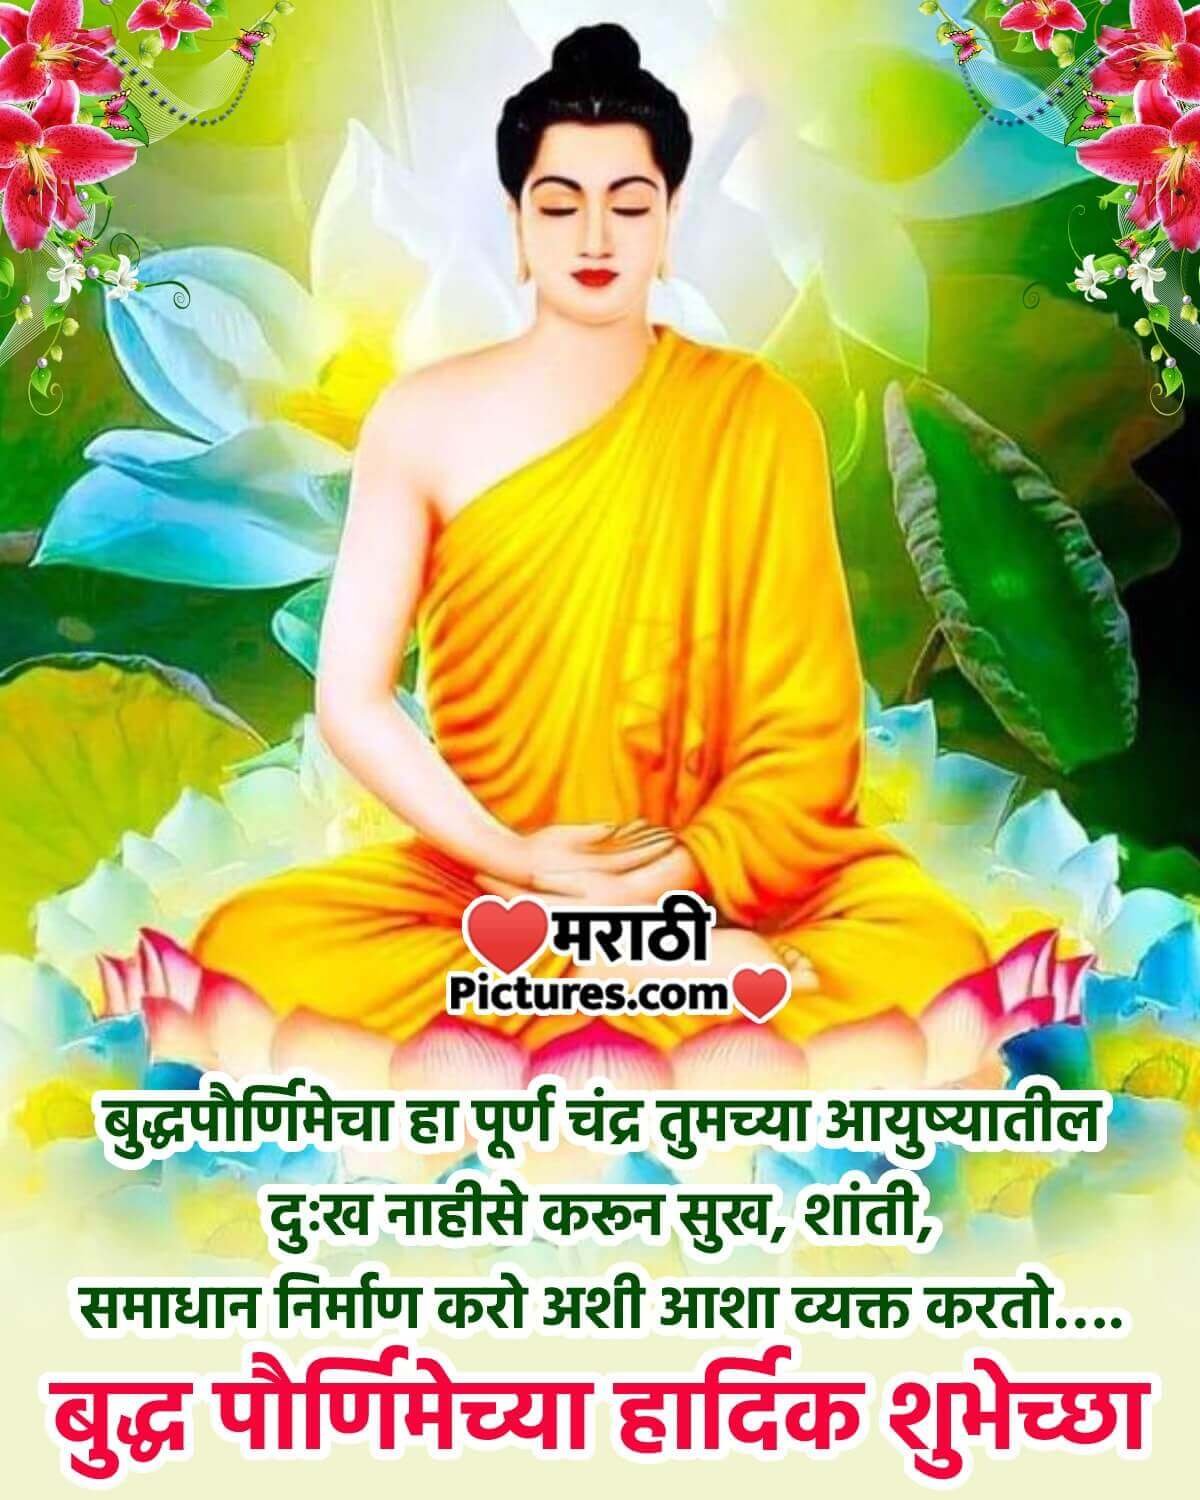 Happy Buddh Purnima Greeting Image